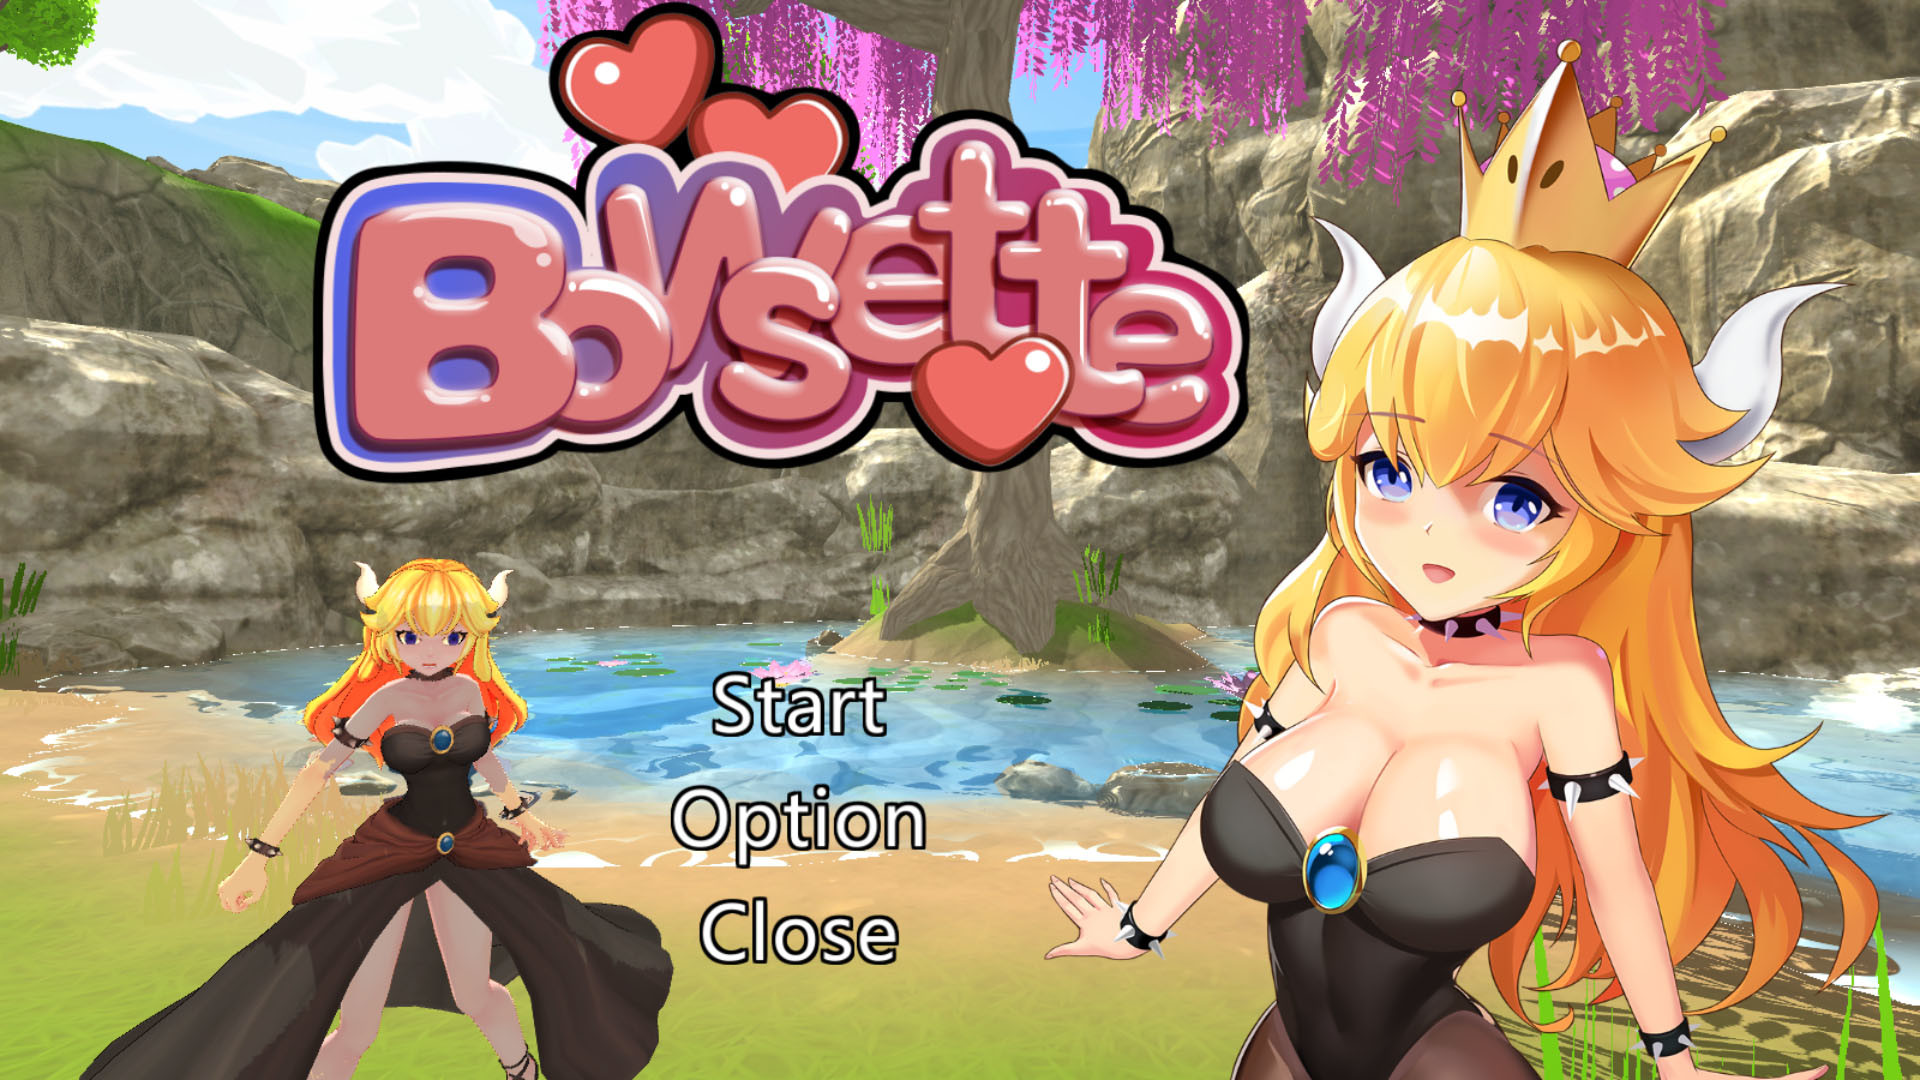 【RPG/中文】森林魔物女王Bowsette Build.7404446 Steam官方中文版【900M】